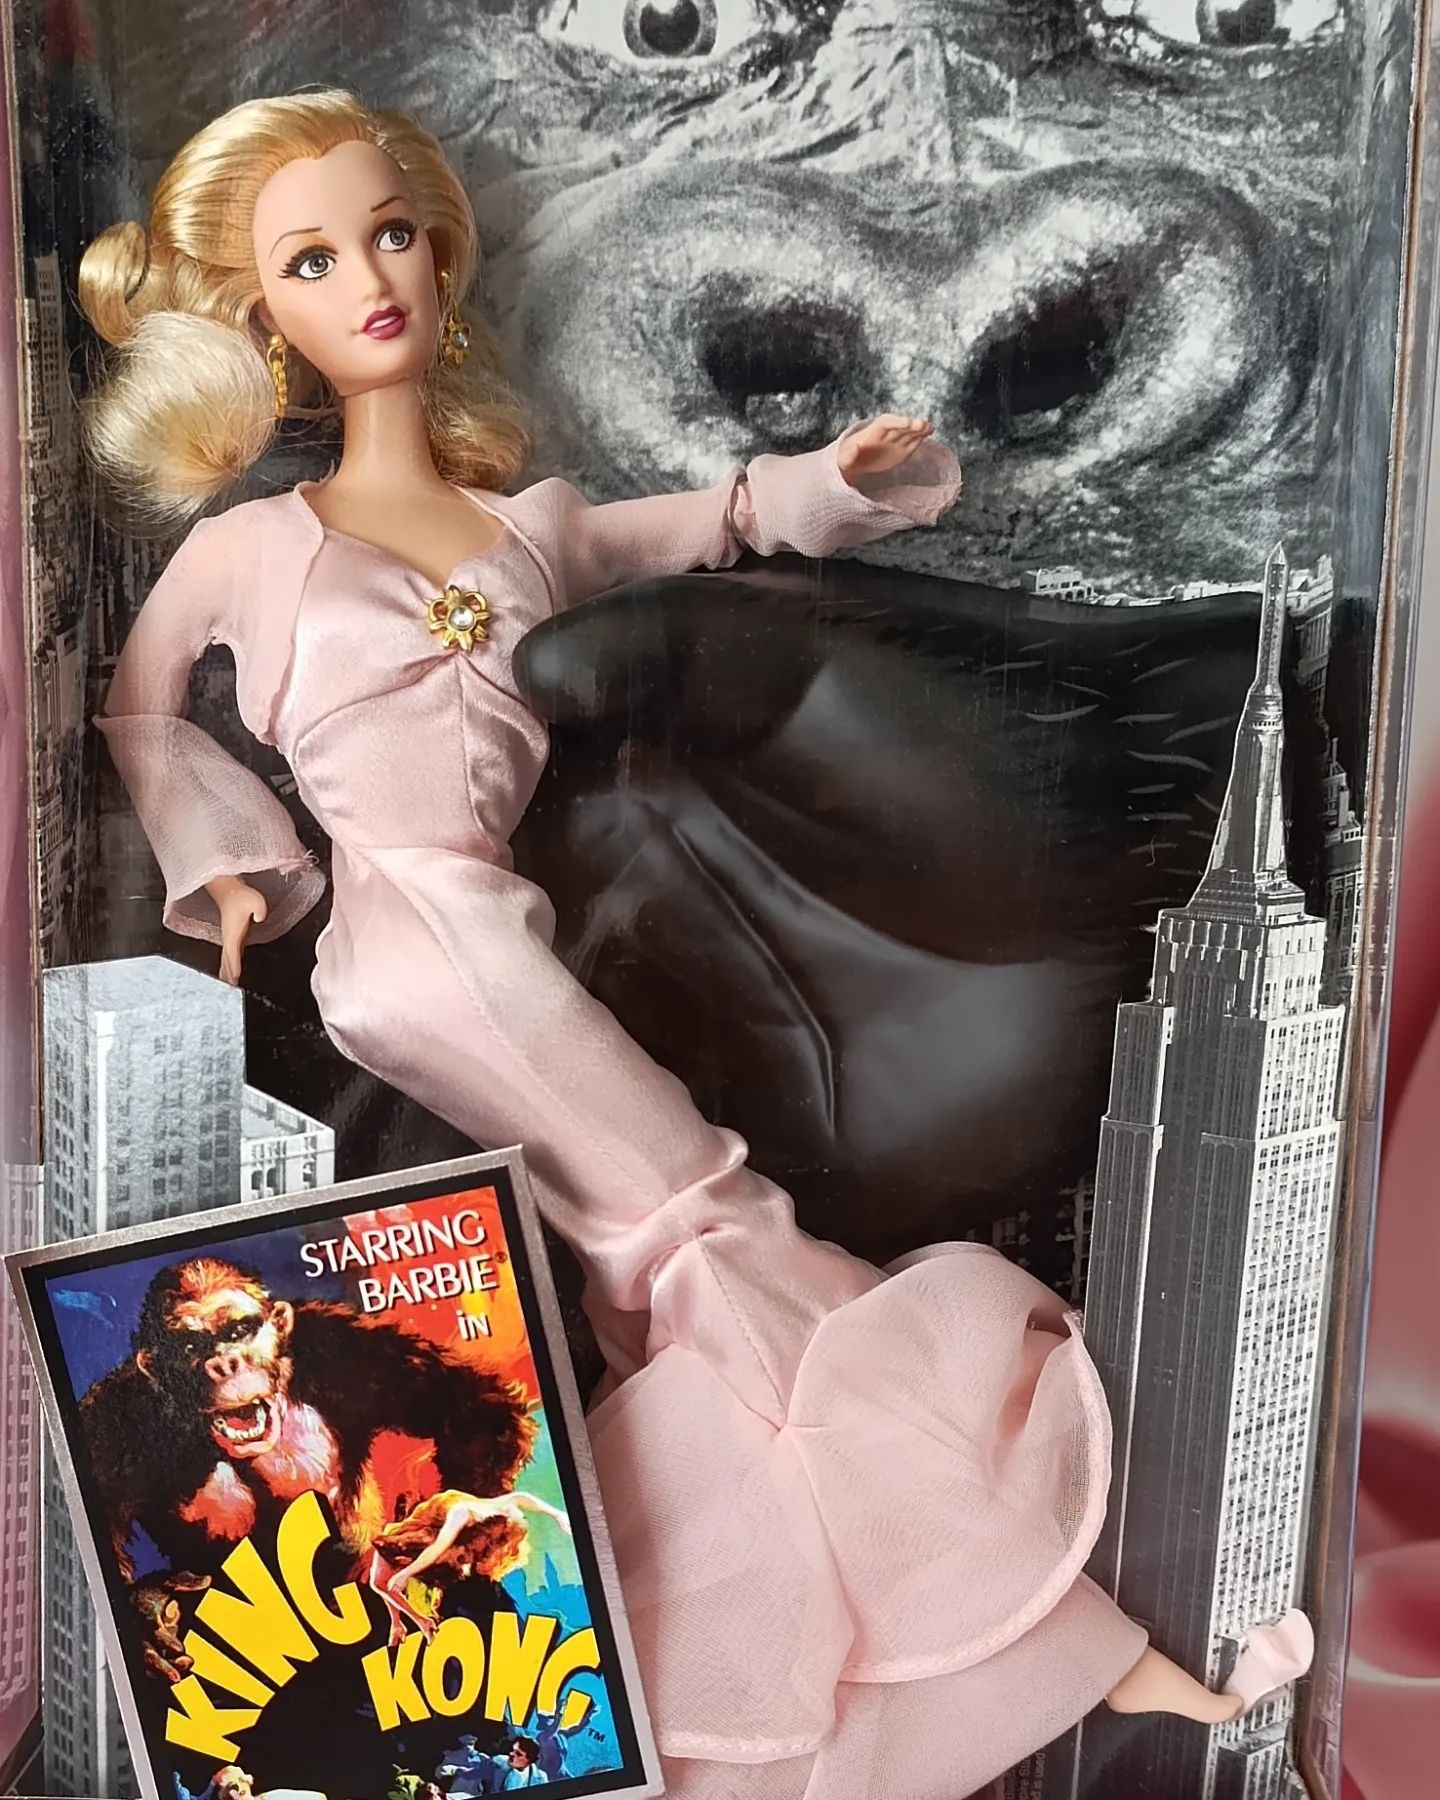 Barbie King Kong 2002 NRFB